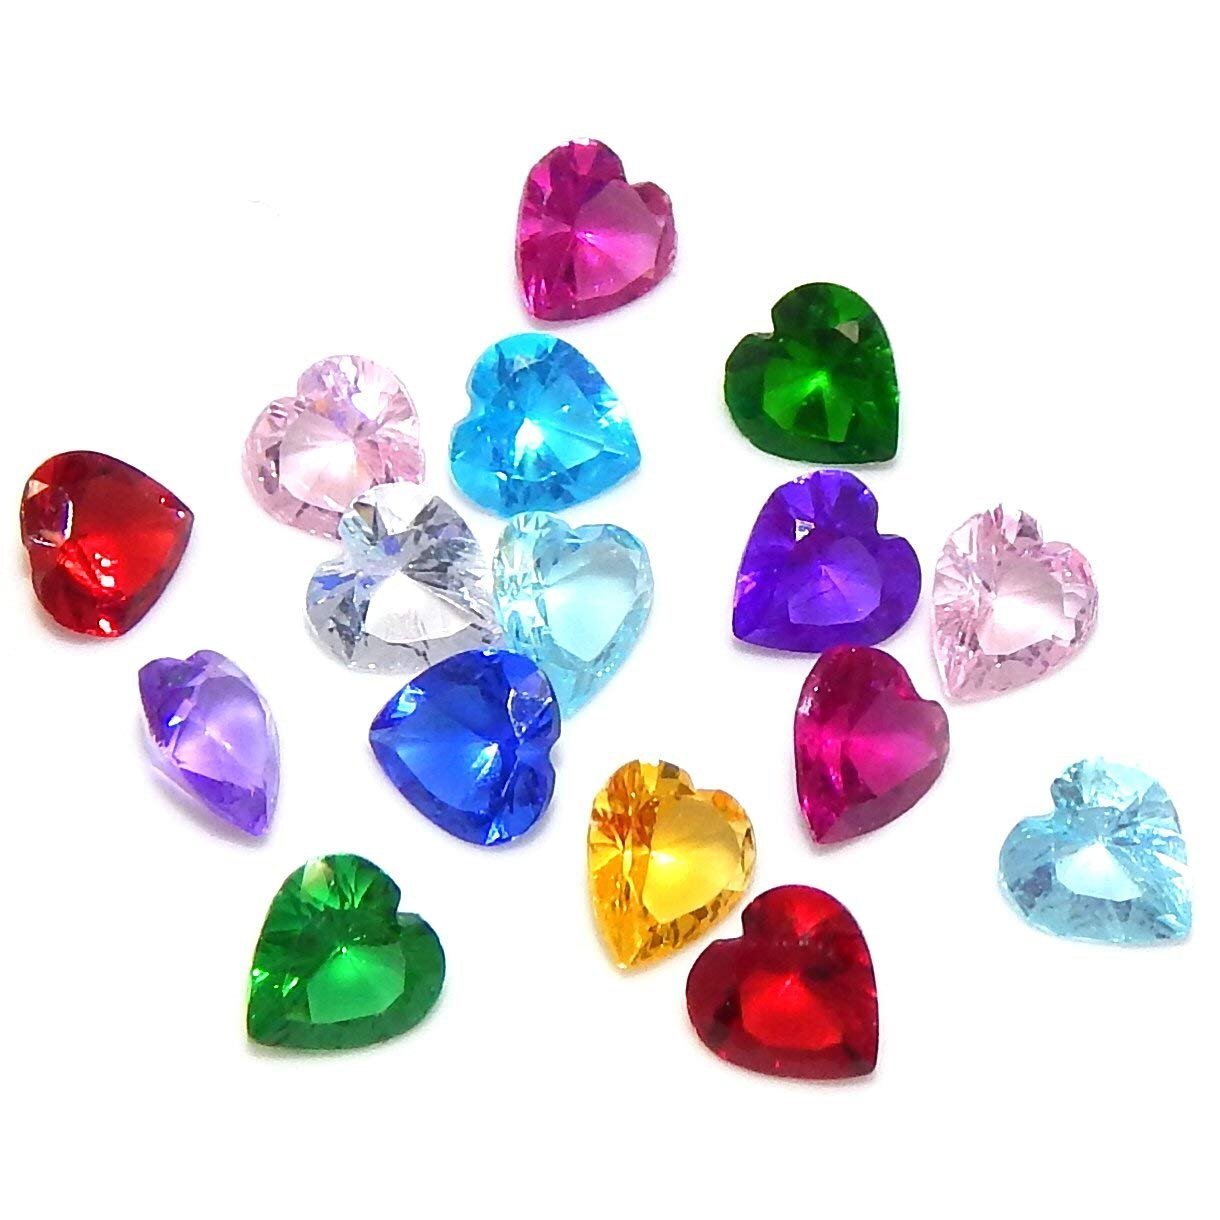 Memory Locket Charm - Birthstone Crystal Heart (December - Blue Zircon) - The Little Jewellery Company